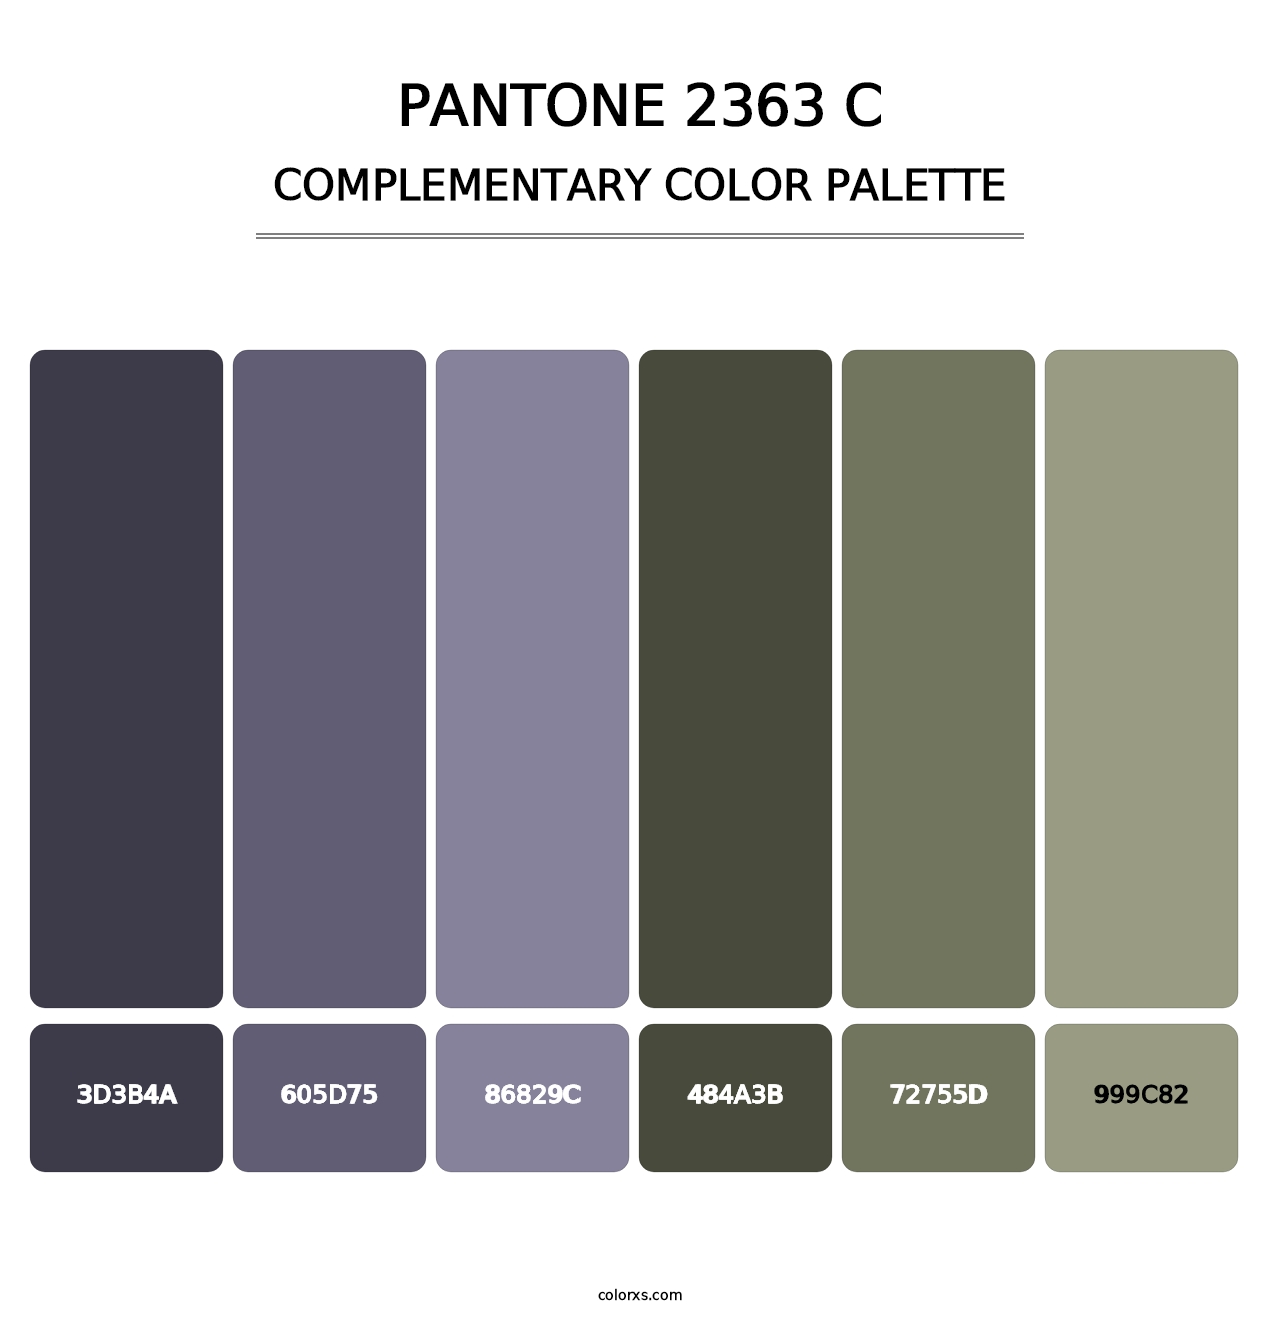 PANTONE 2363 C - Complementary Color Palette